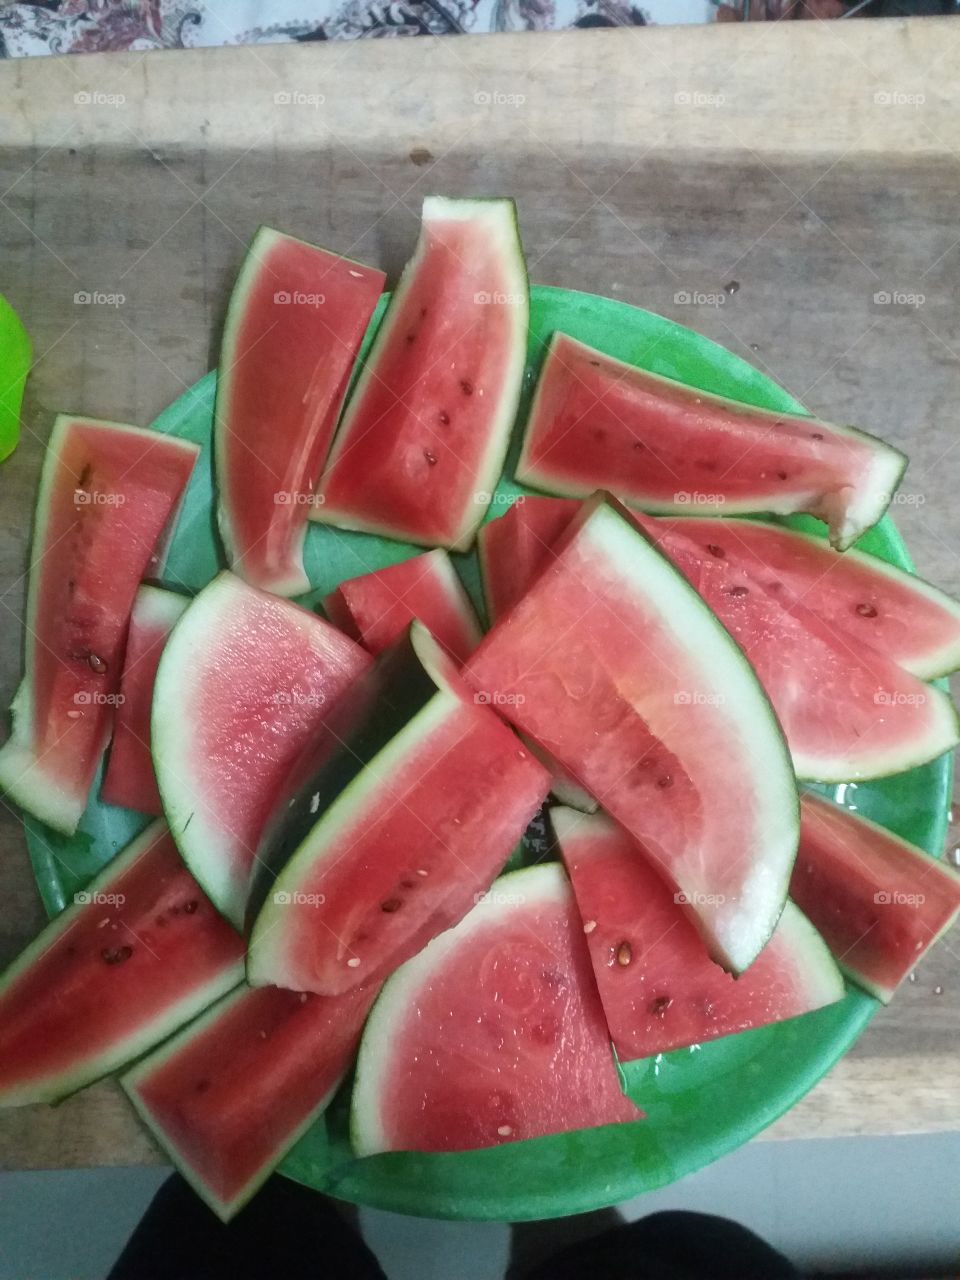 The best refreshment in Summer - Watermelon